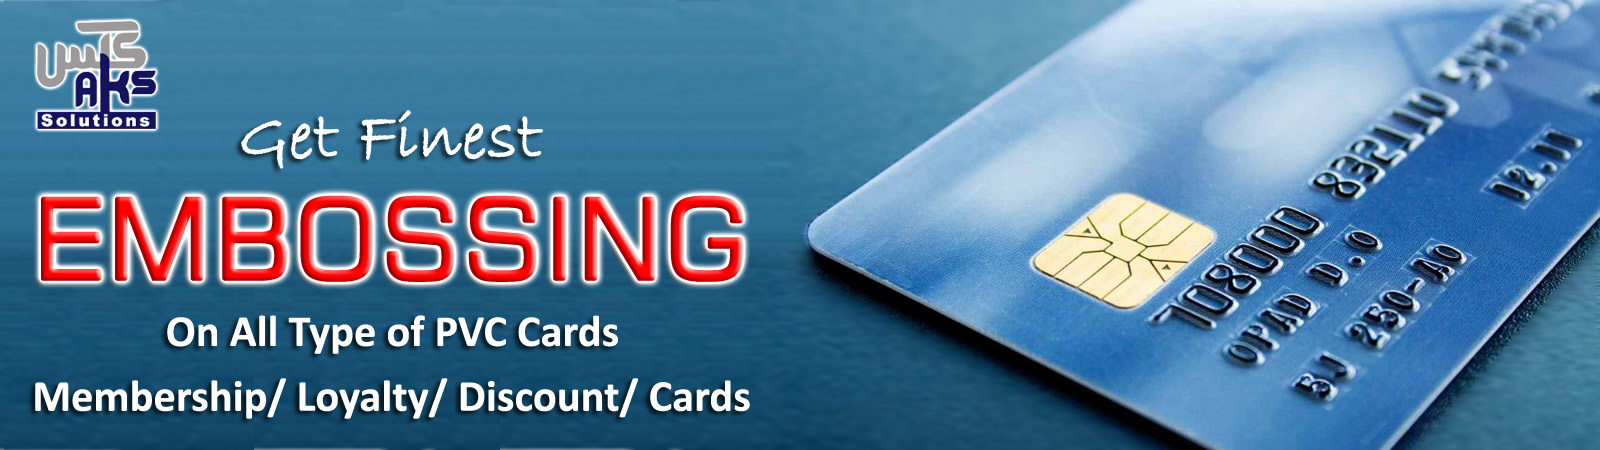 PVC Card Embossing slide-5.jpg